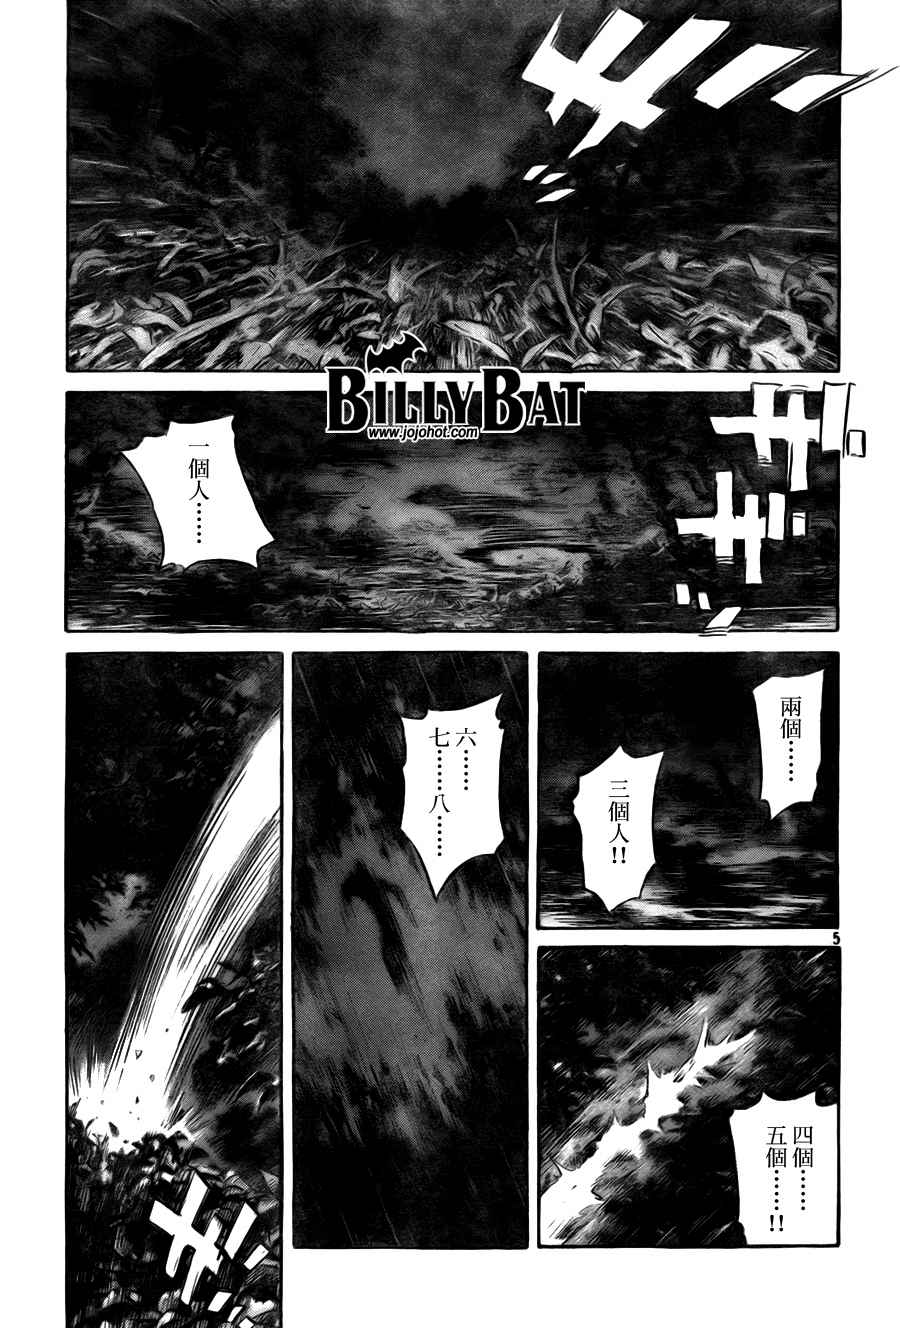 Billy_Bat - 第3卷(1/5) - 7